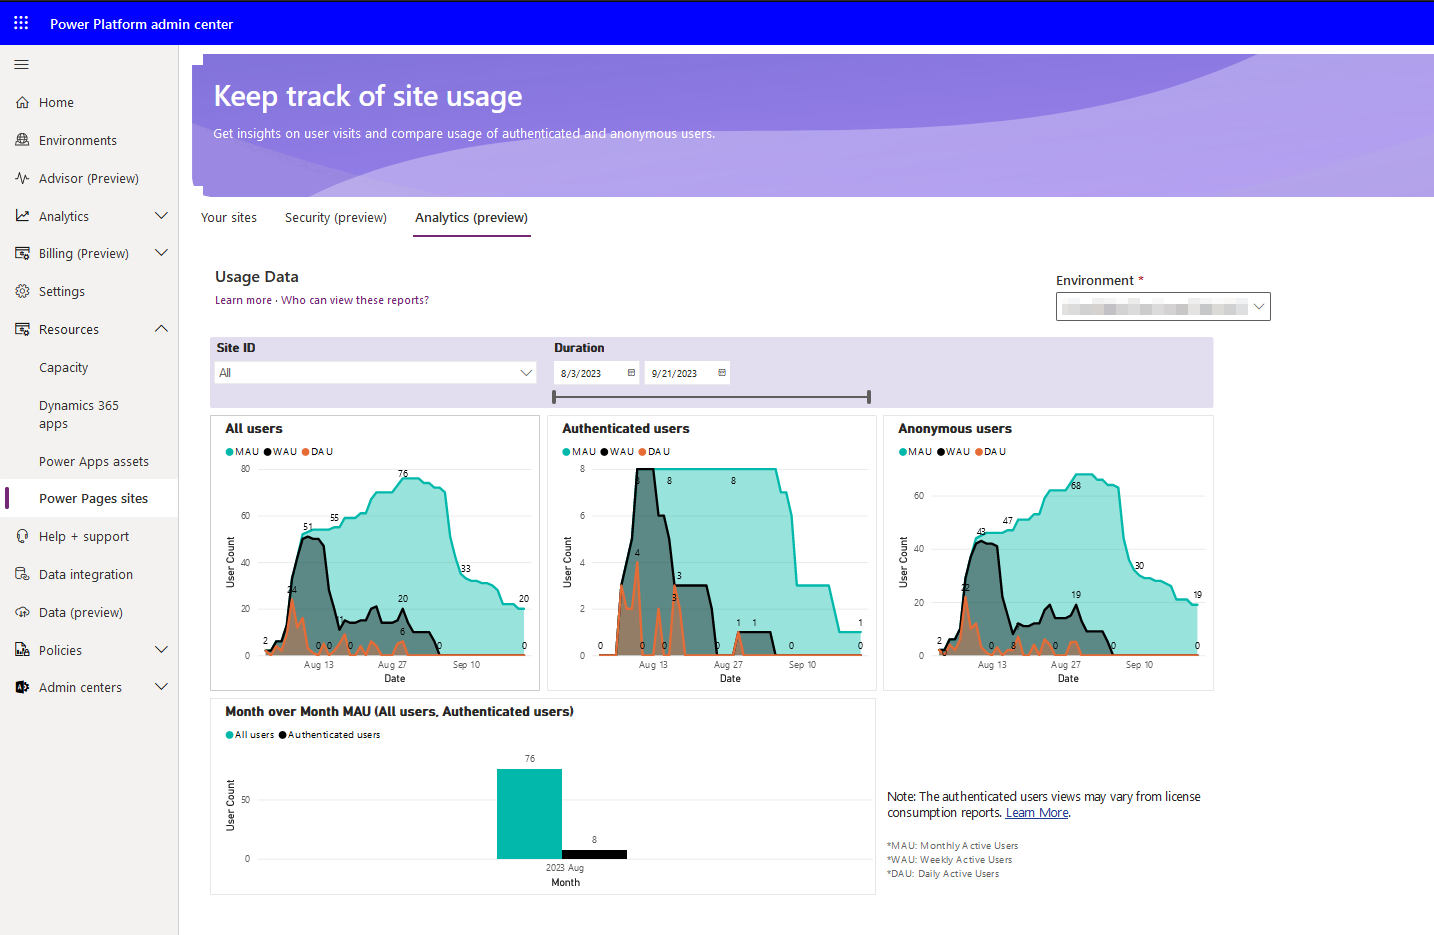 A screenshot of Power Pages sites inside Power Platform admin center displaying Usage data.